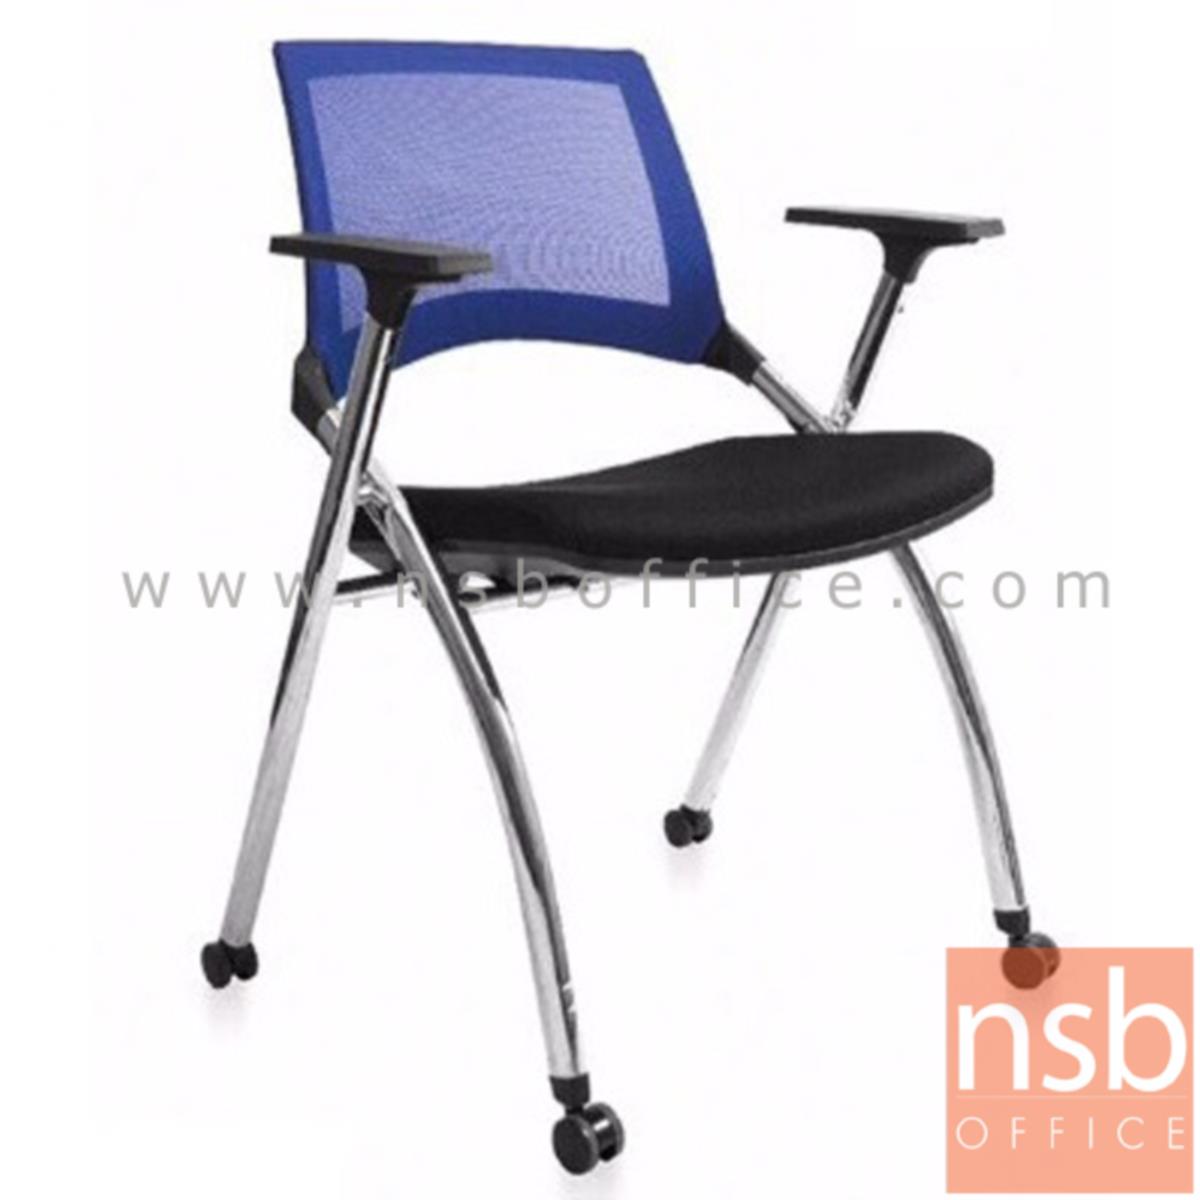 B28A076:เก้าอี้สำนักงานหลังเน็ต รุ่น Nighstisters  ขาเหล็กชุบโครเมี่ยม